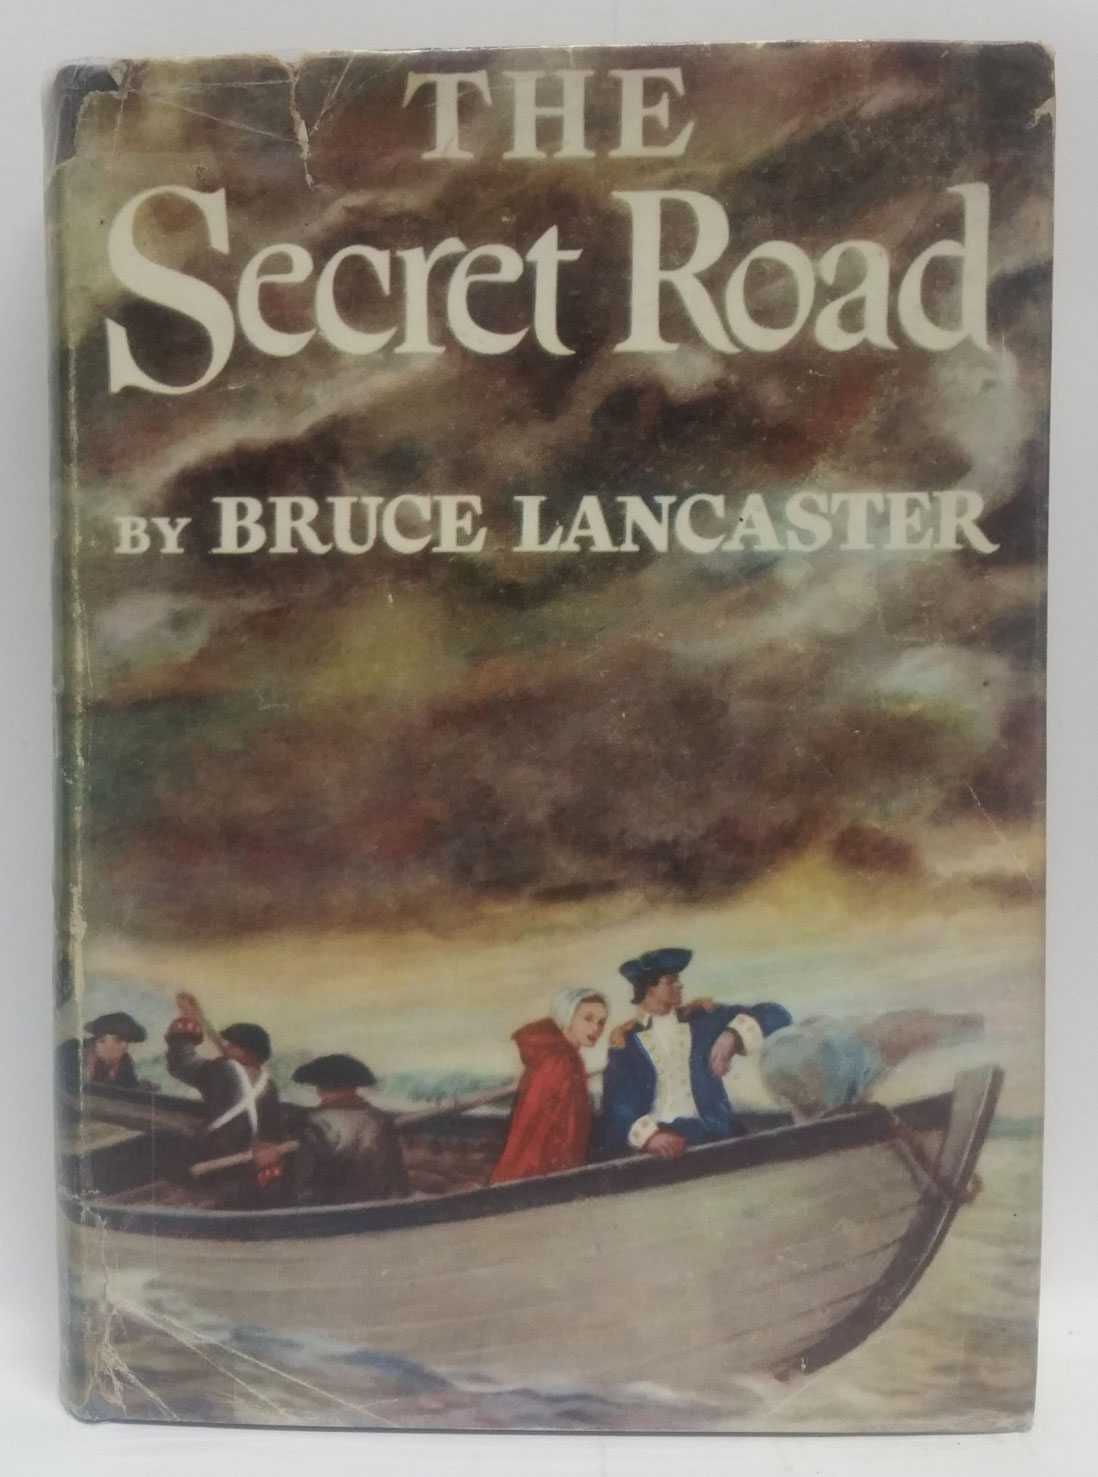 Bruce Lancaster - The Secret Road